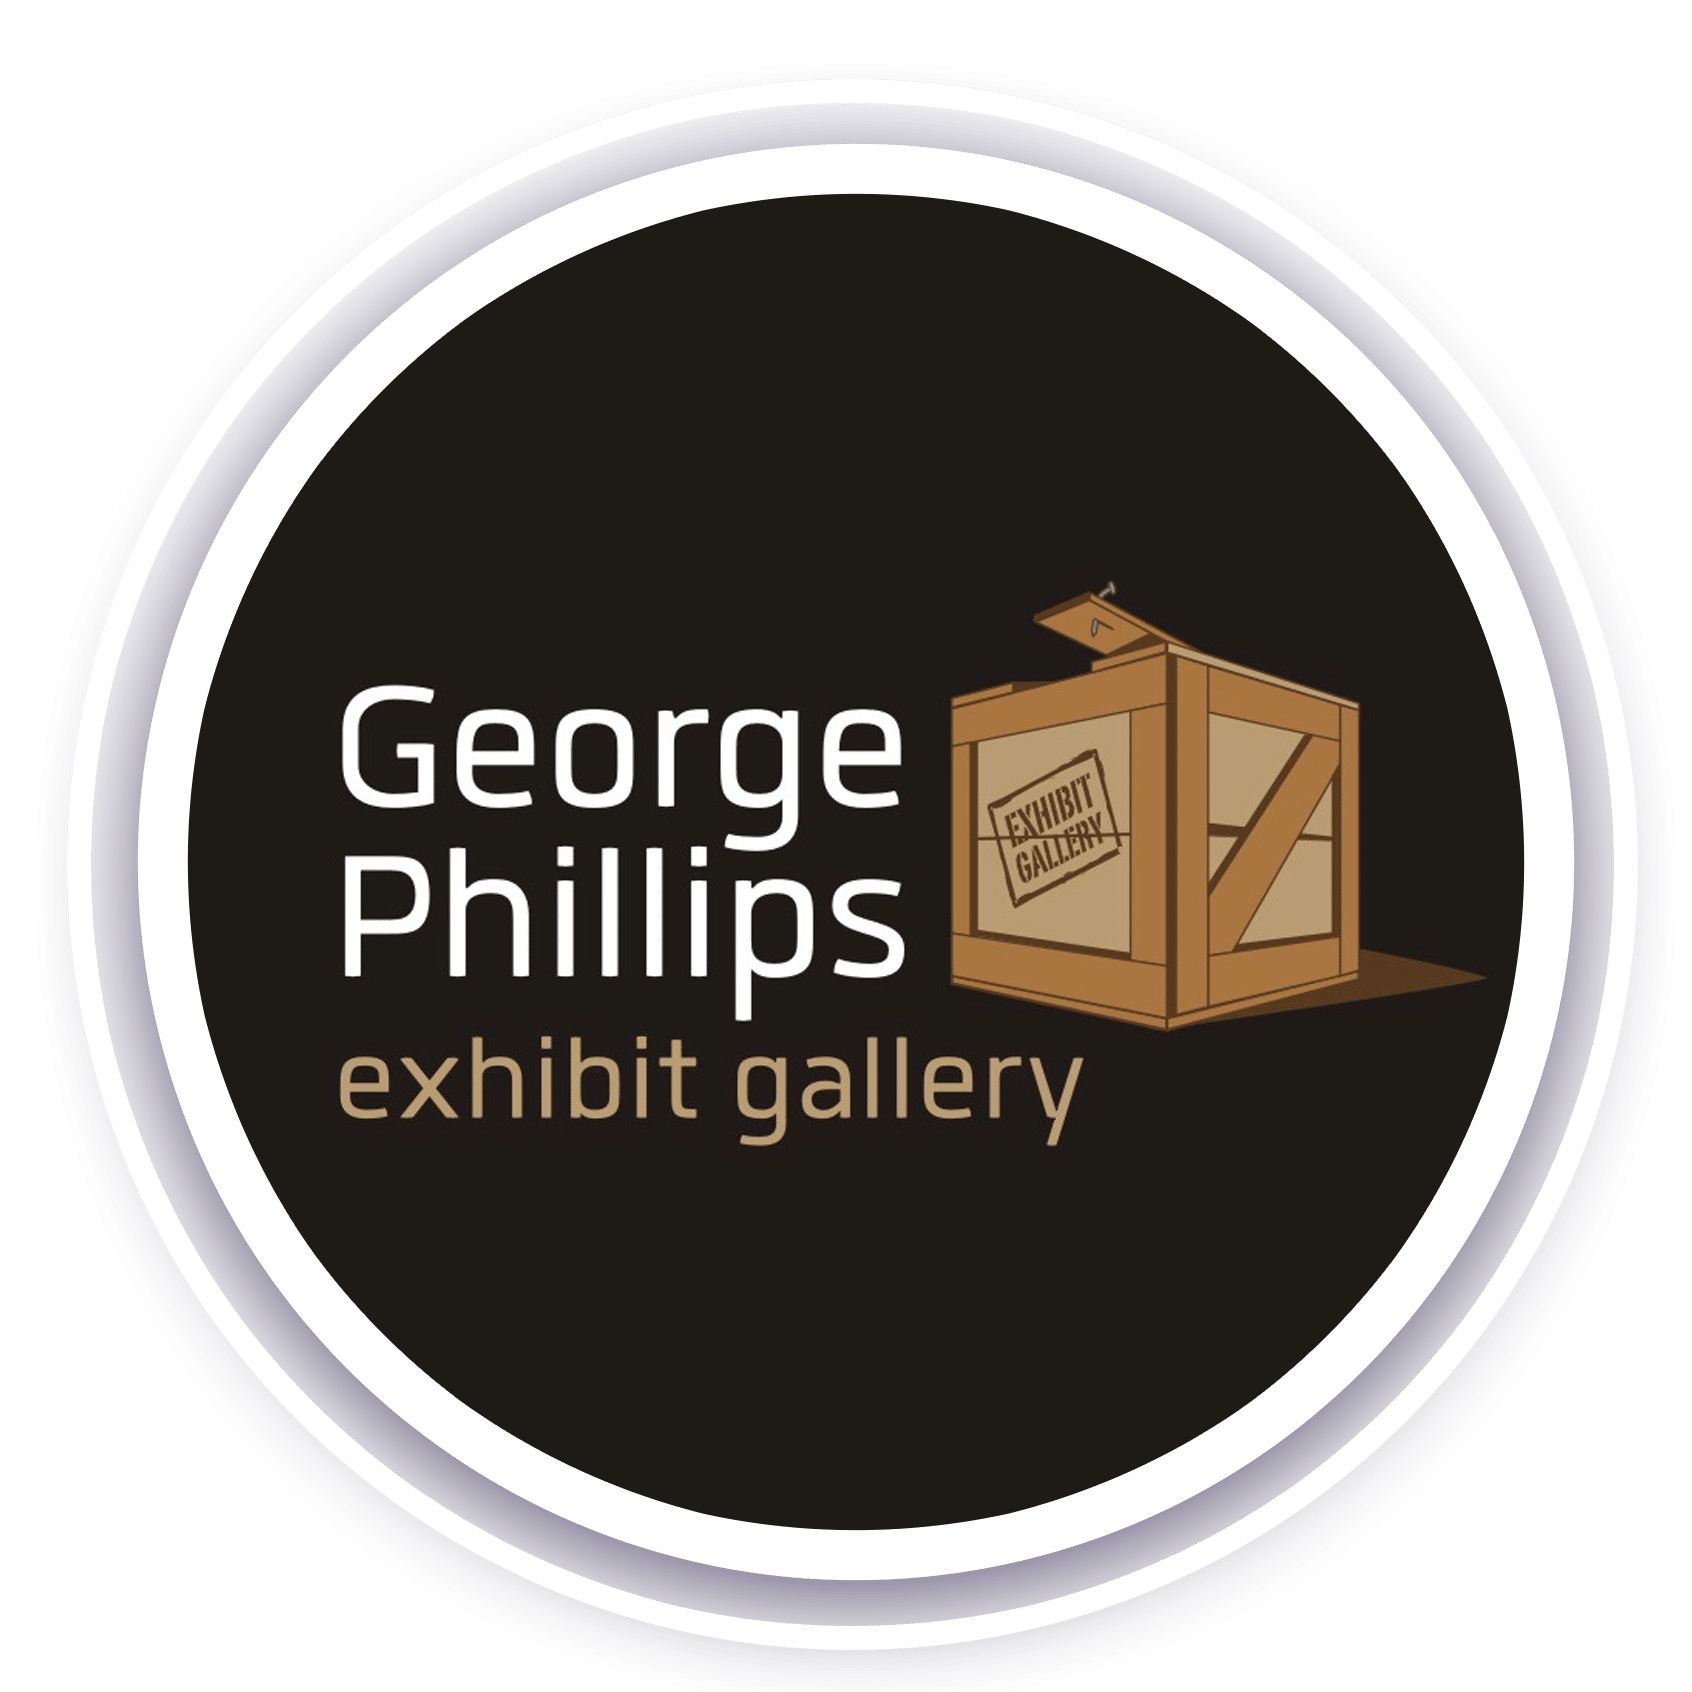 George Phillips Exhibit Gallery